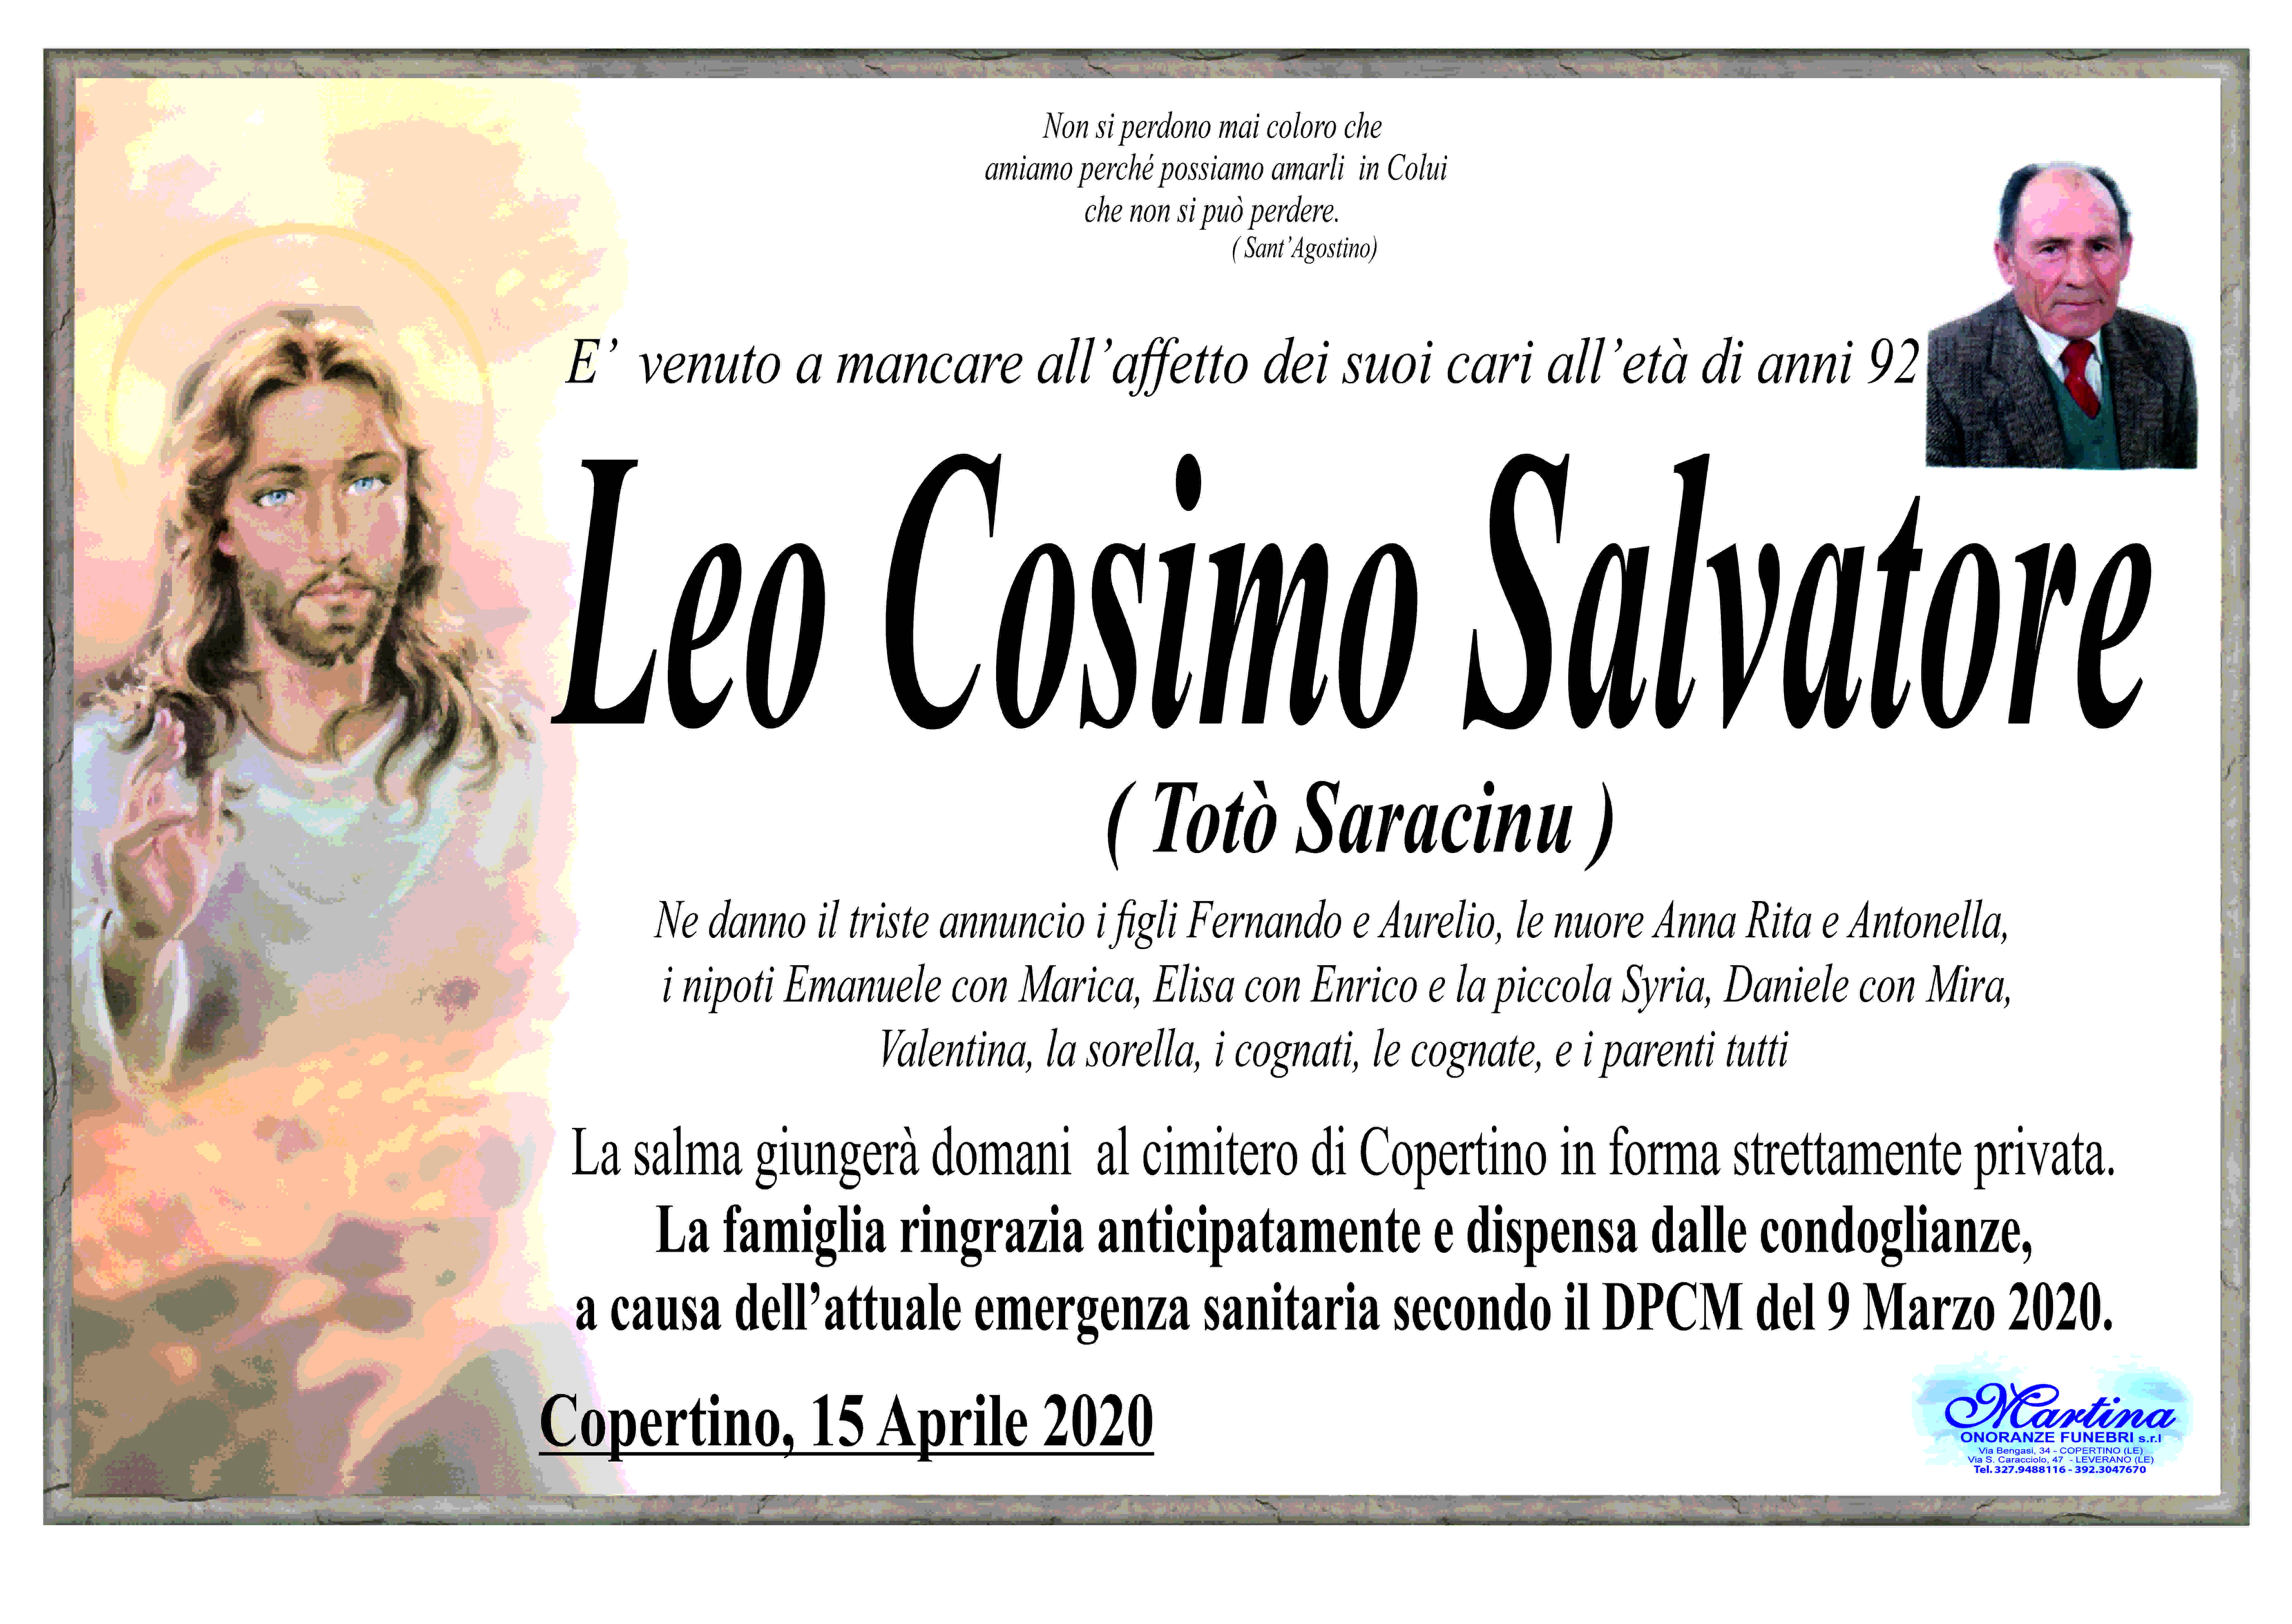 Cosimo Salvatore Leo